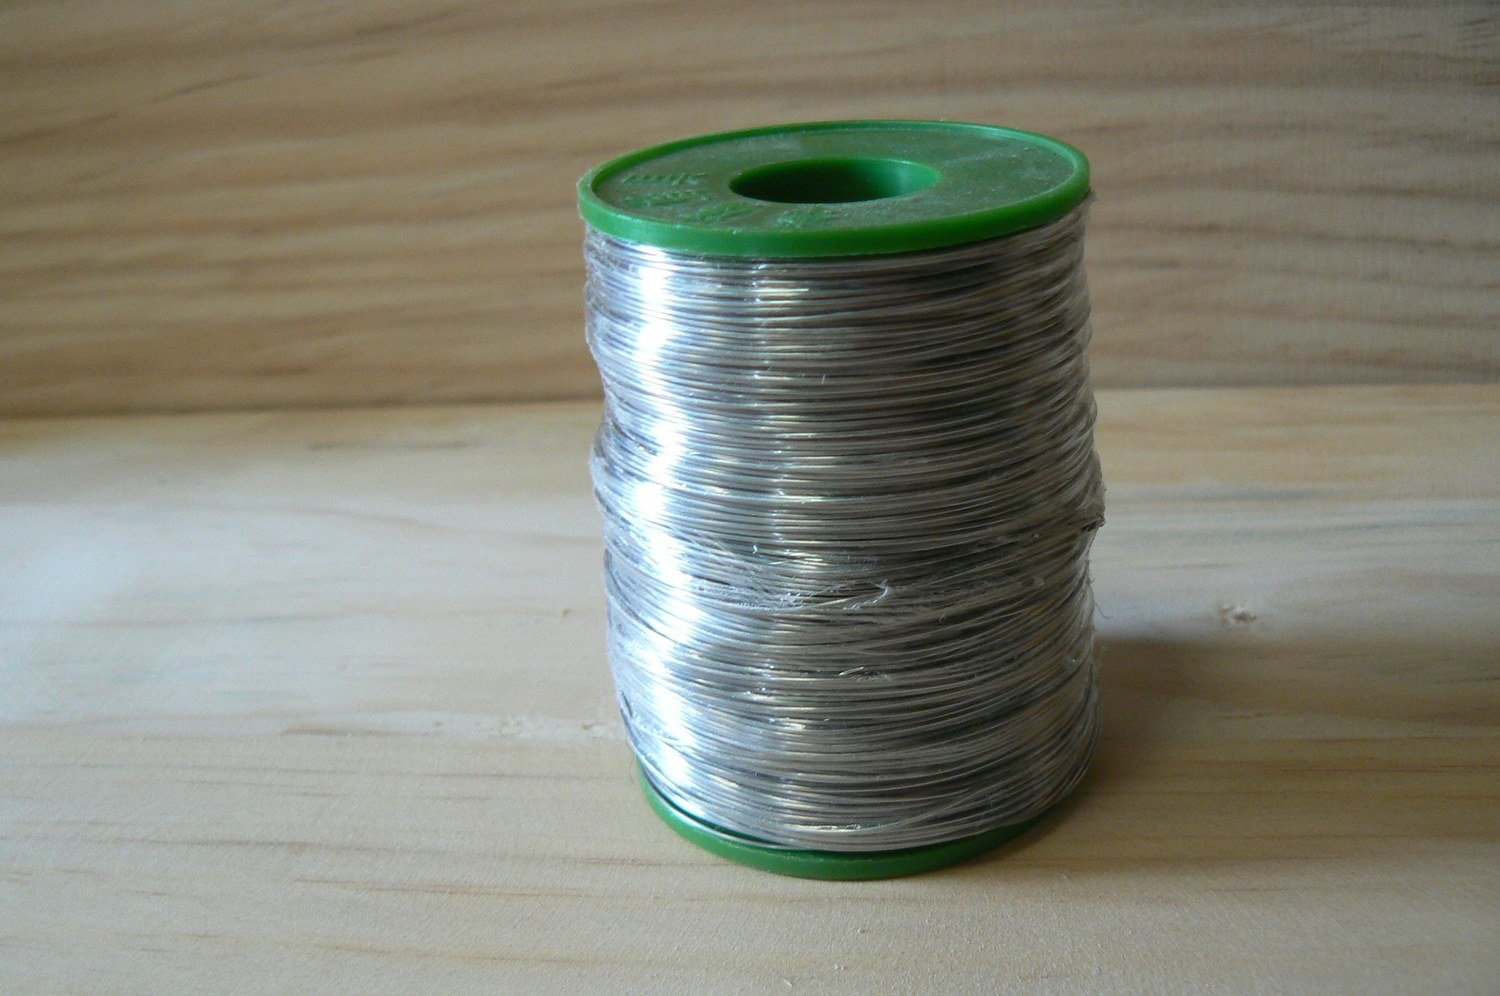 Foundation wire (306 S/S) 500g per roll